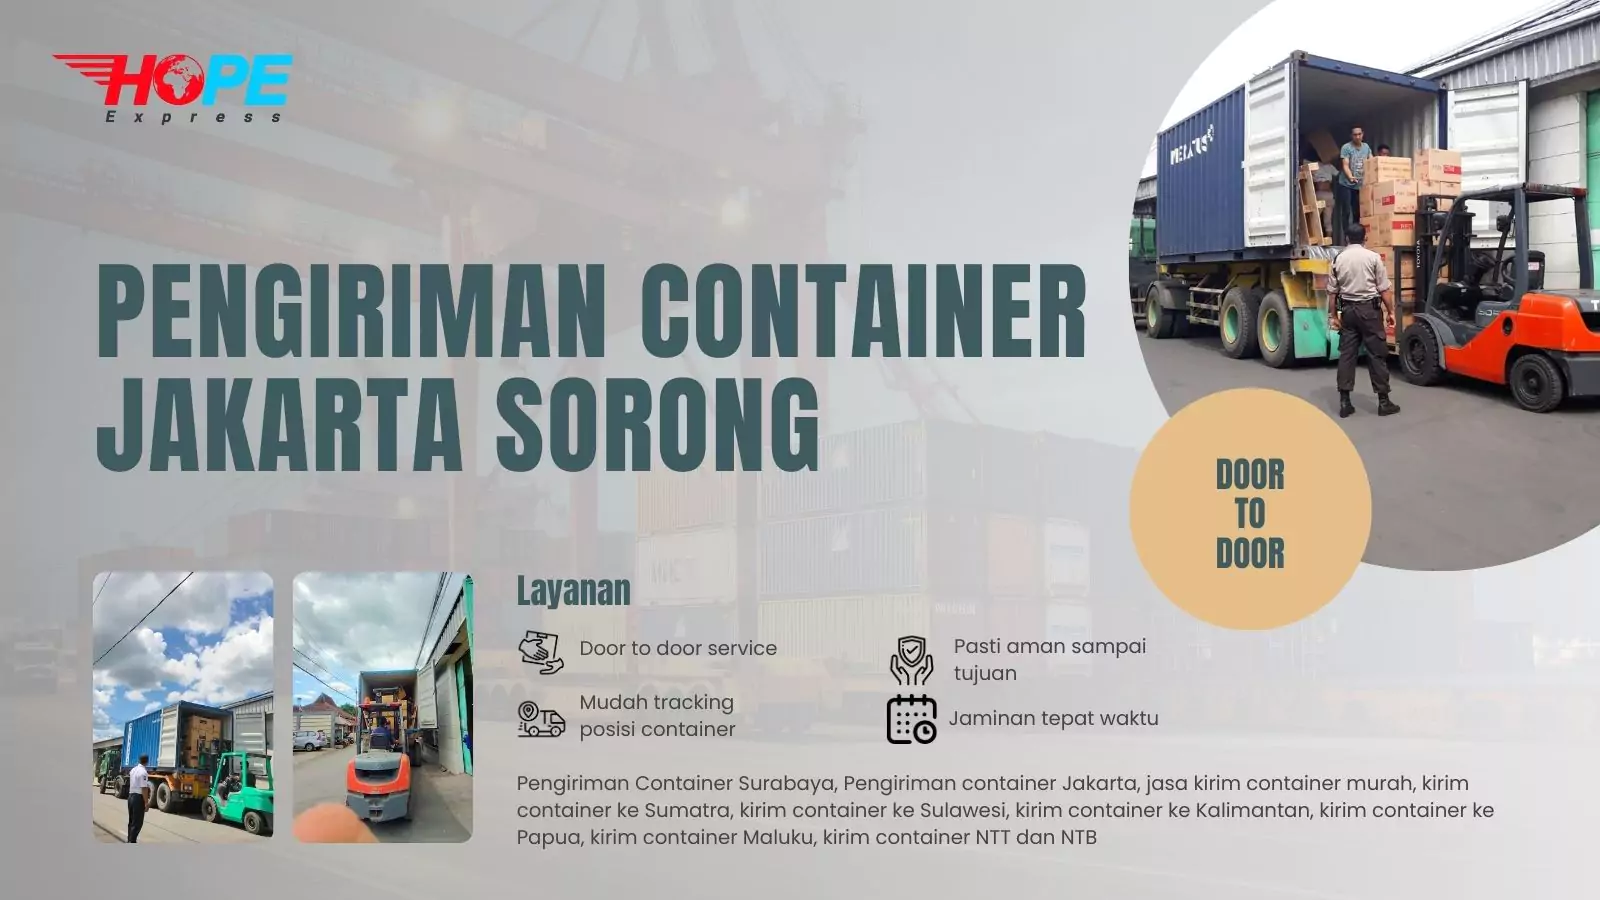 Pengiriman Container Jakarta Sorong